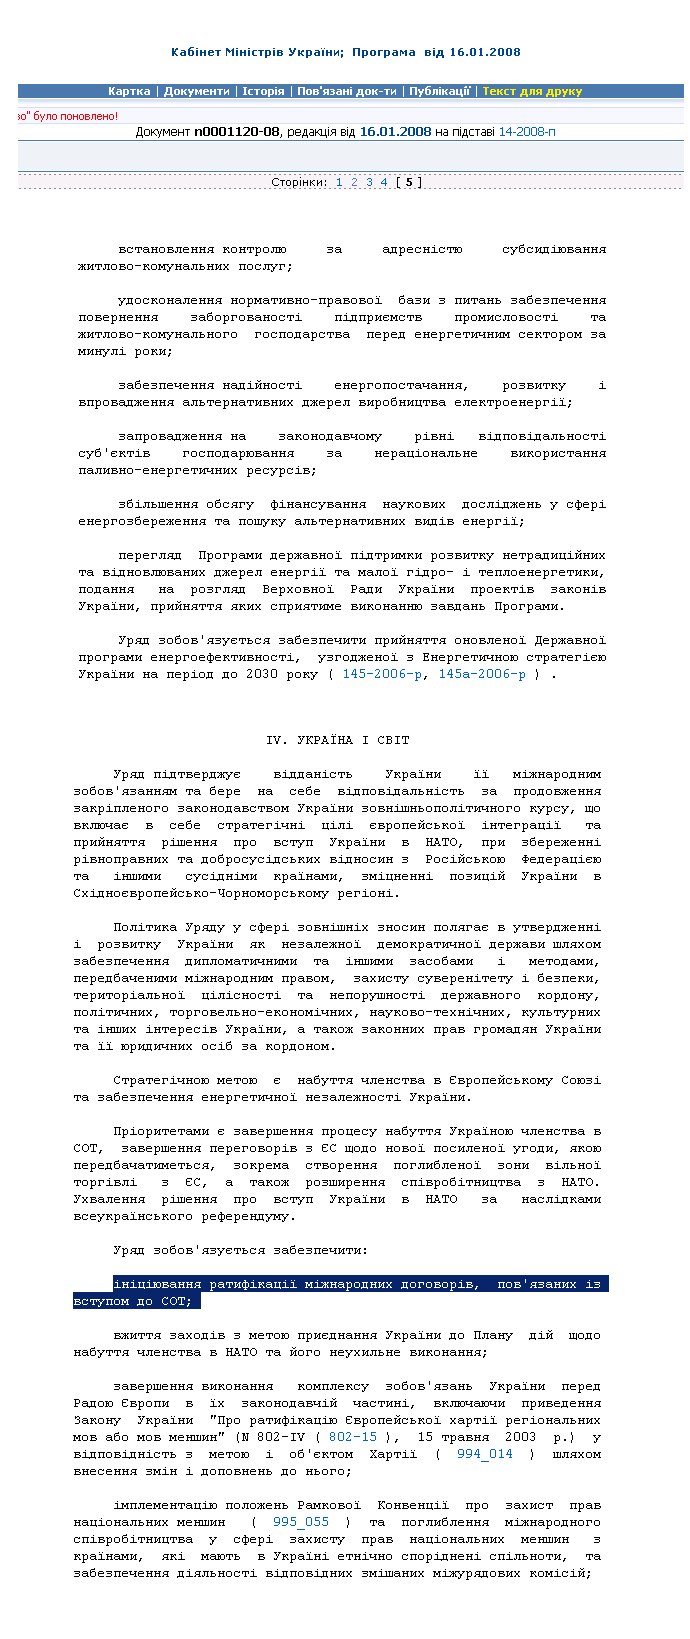 http://zakon.rada.gov.ua/cgi-bin/laws/main.cgi?page=5&nreg=n0001120-08